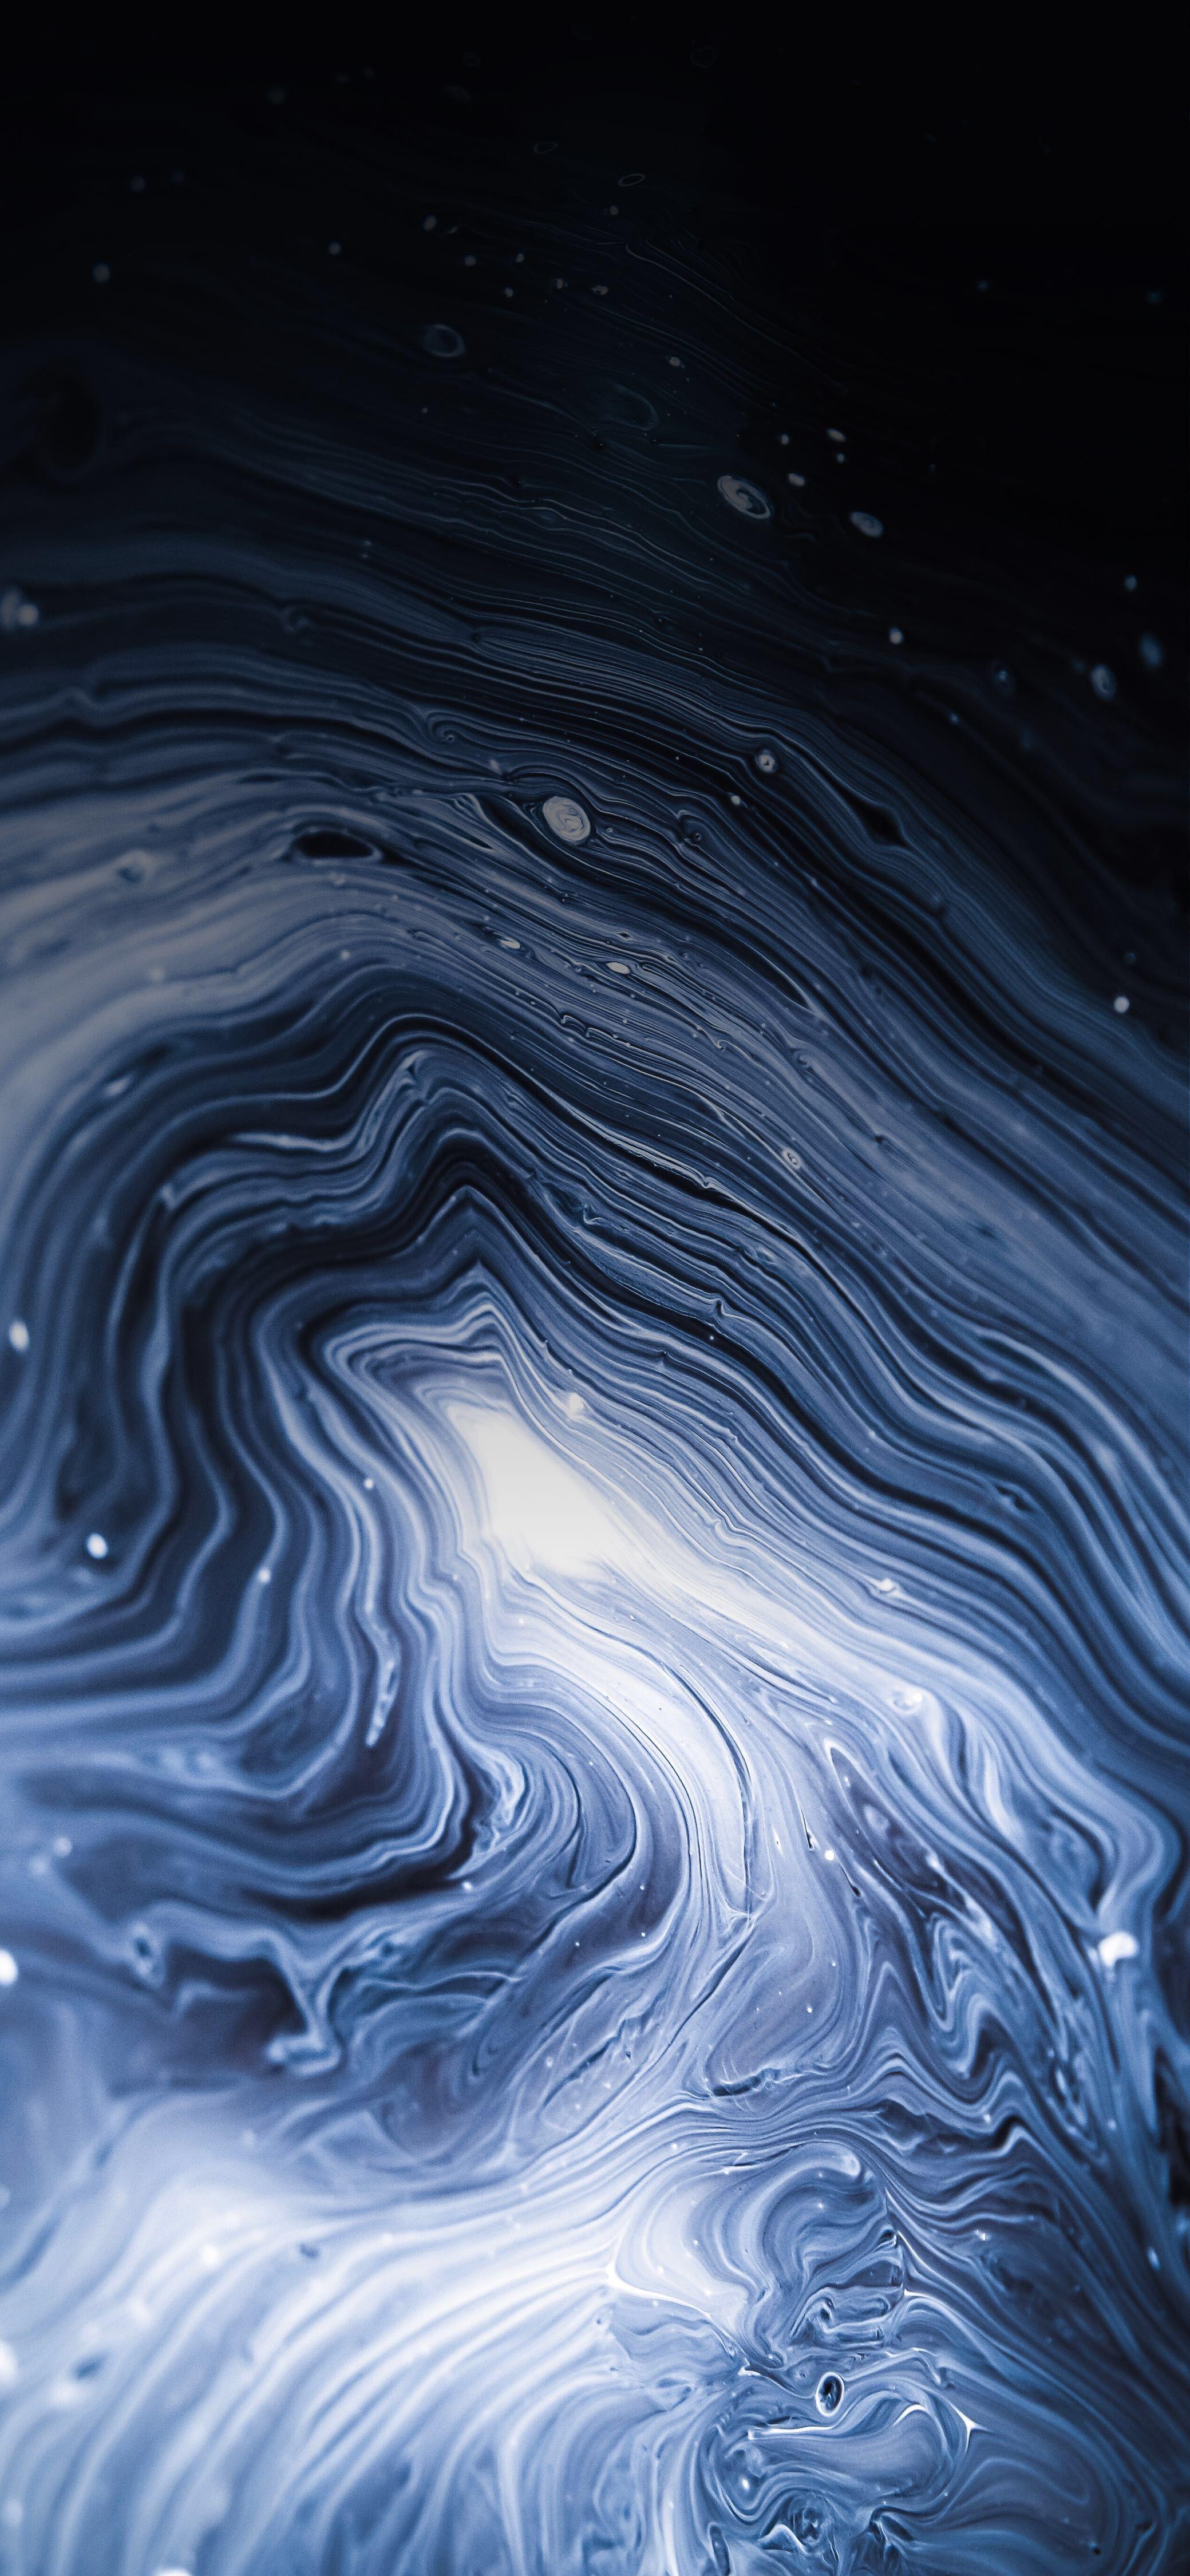 Liquid texture, pattern. Looks like floating galaxy. Acrylic